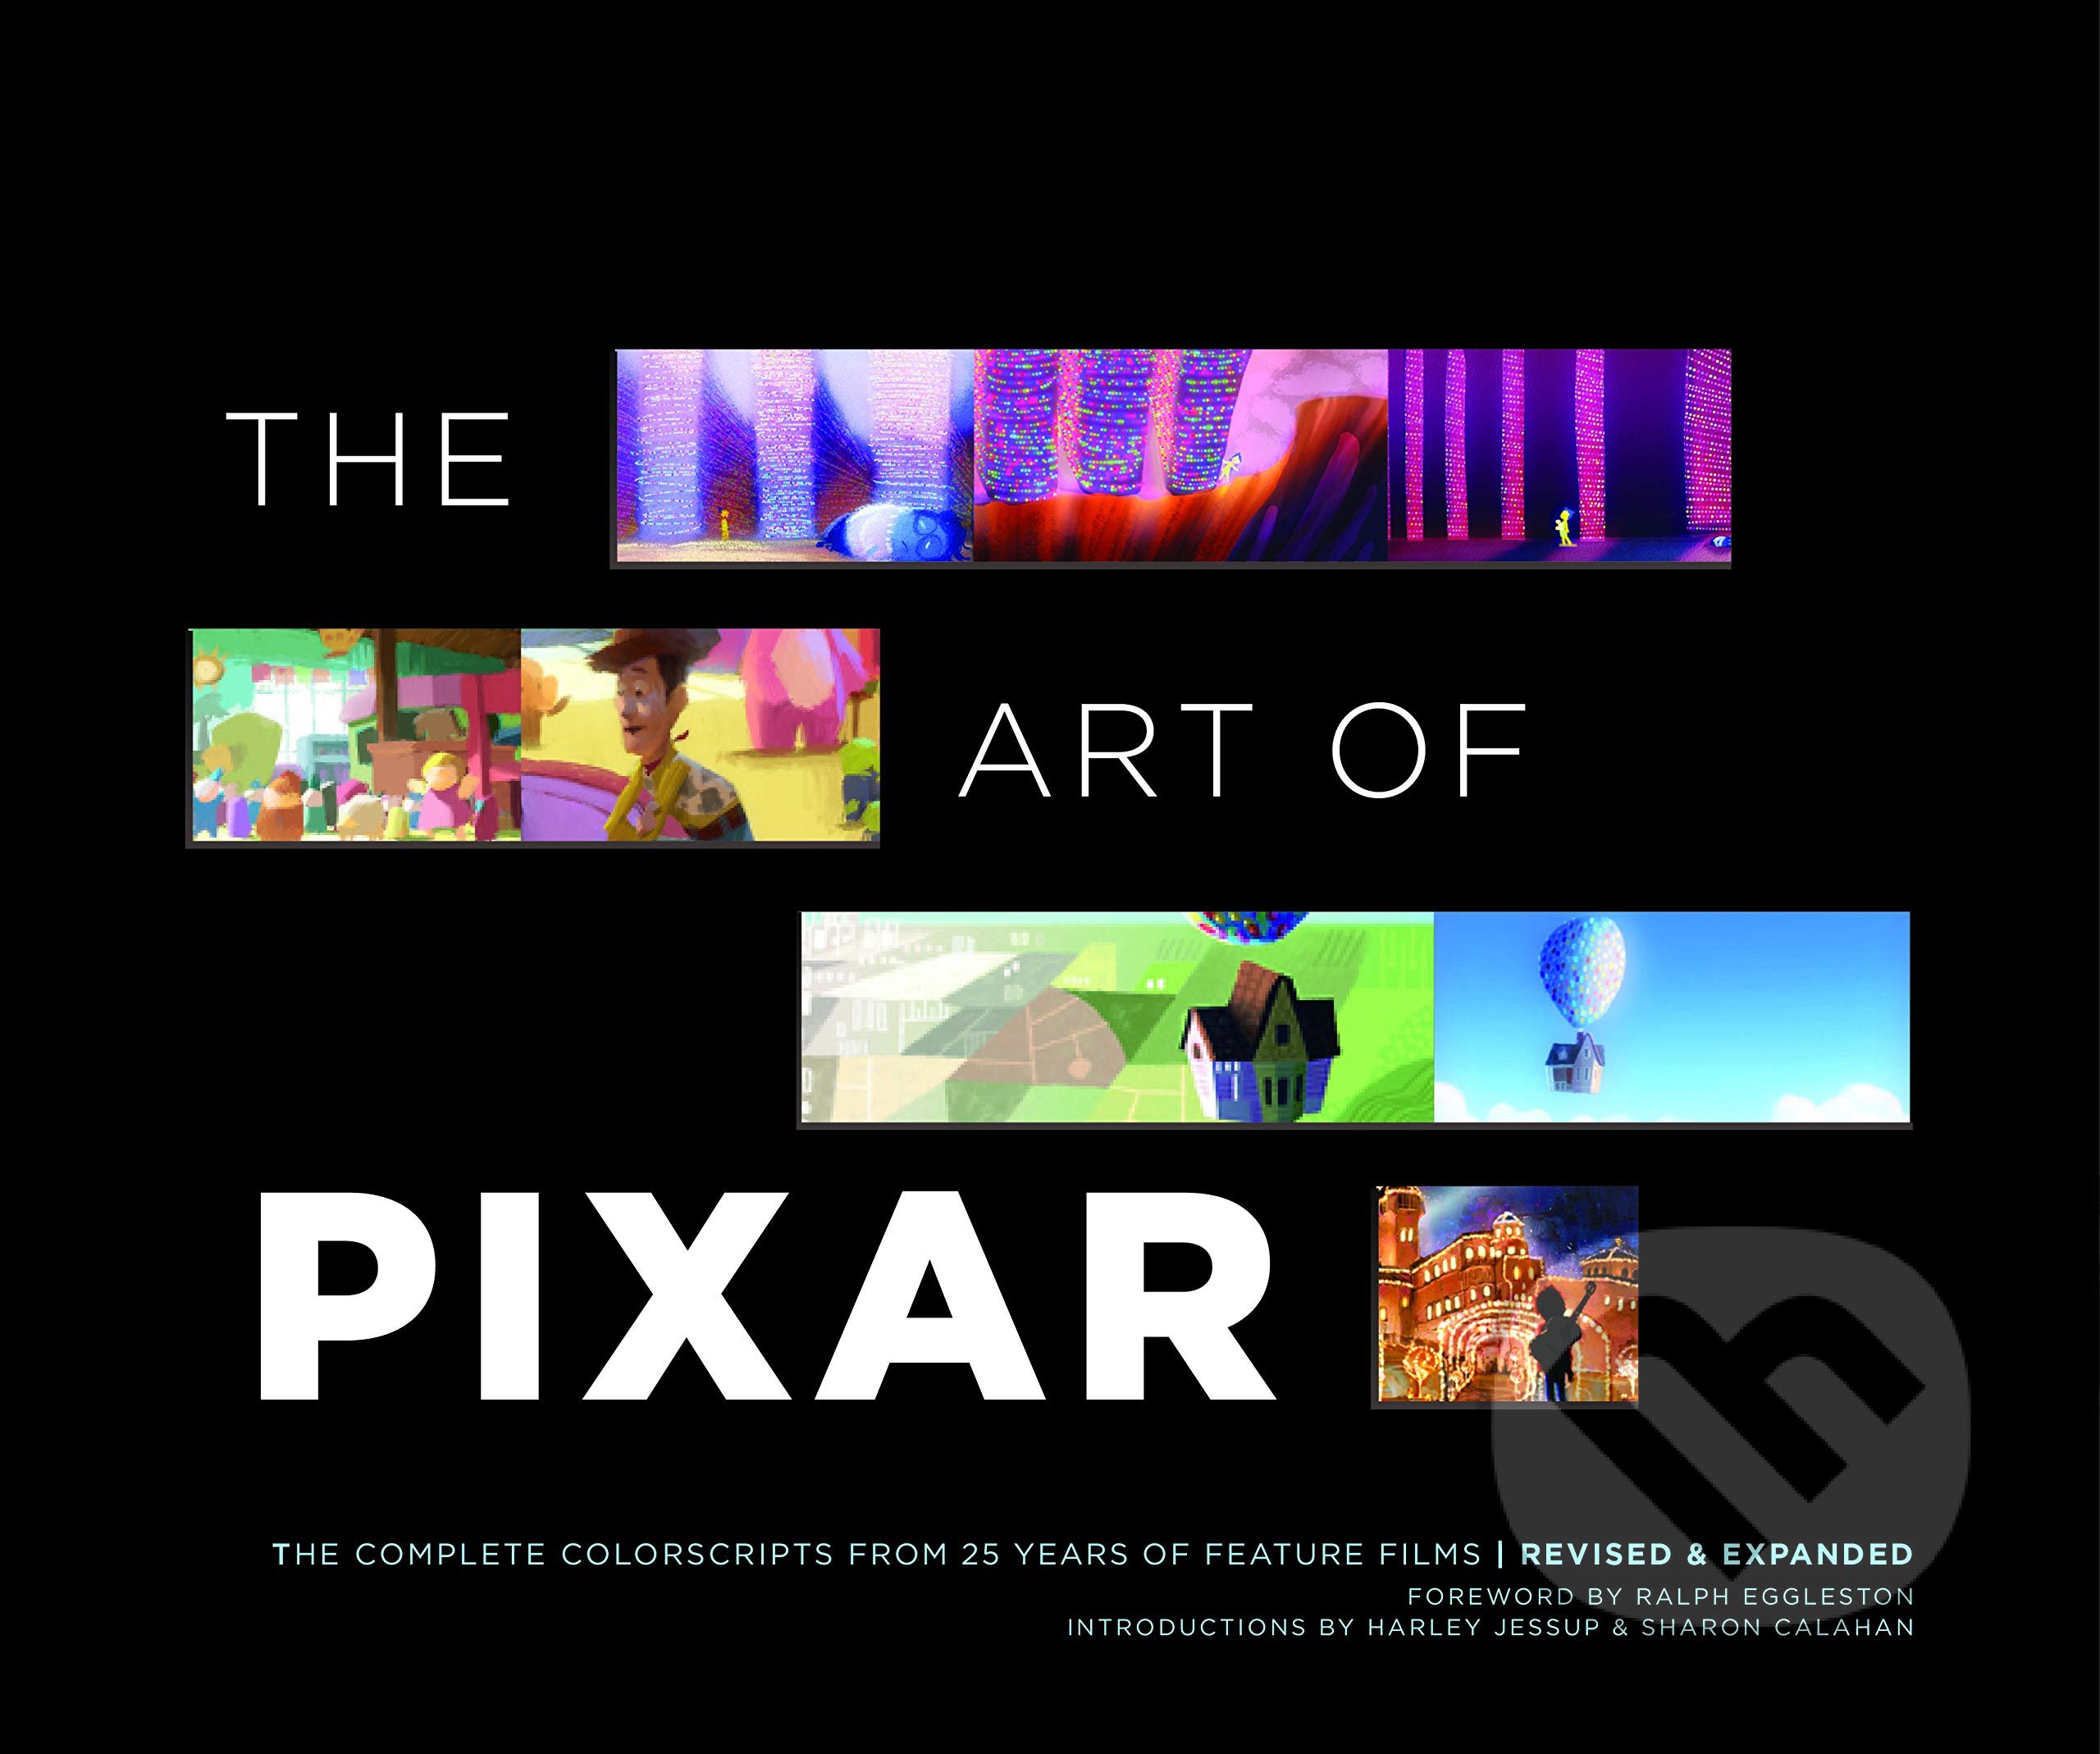 The Art of Pixar, Chronicle Books, 2020